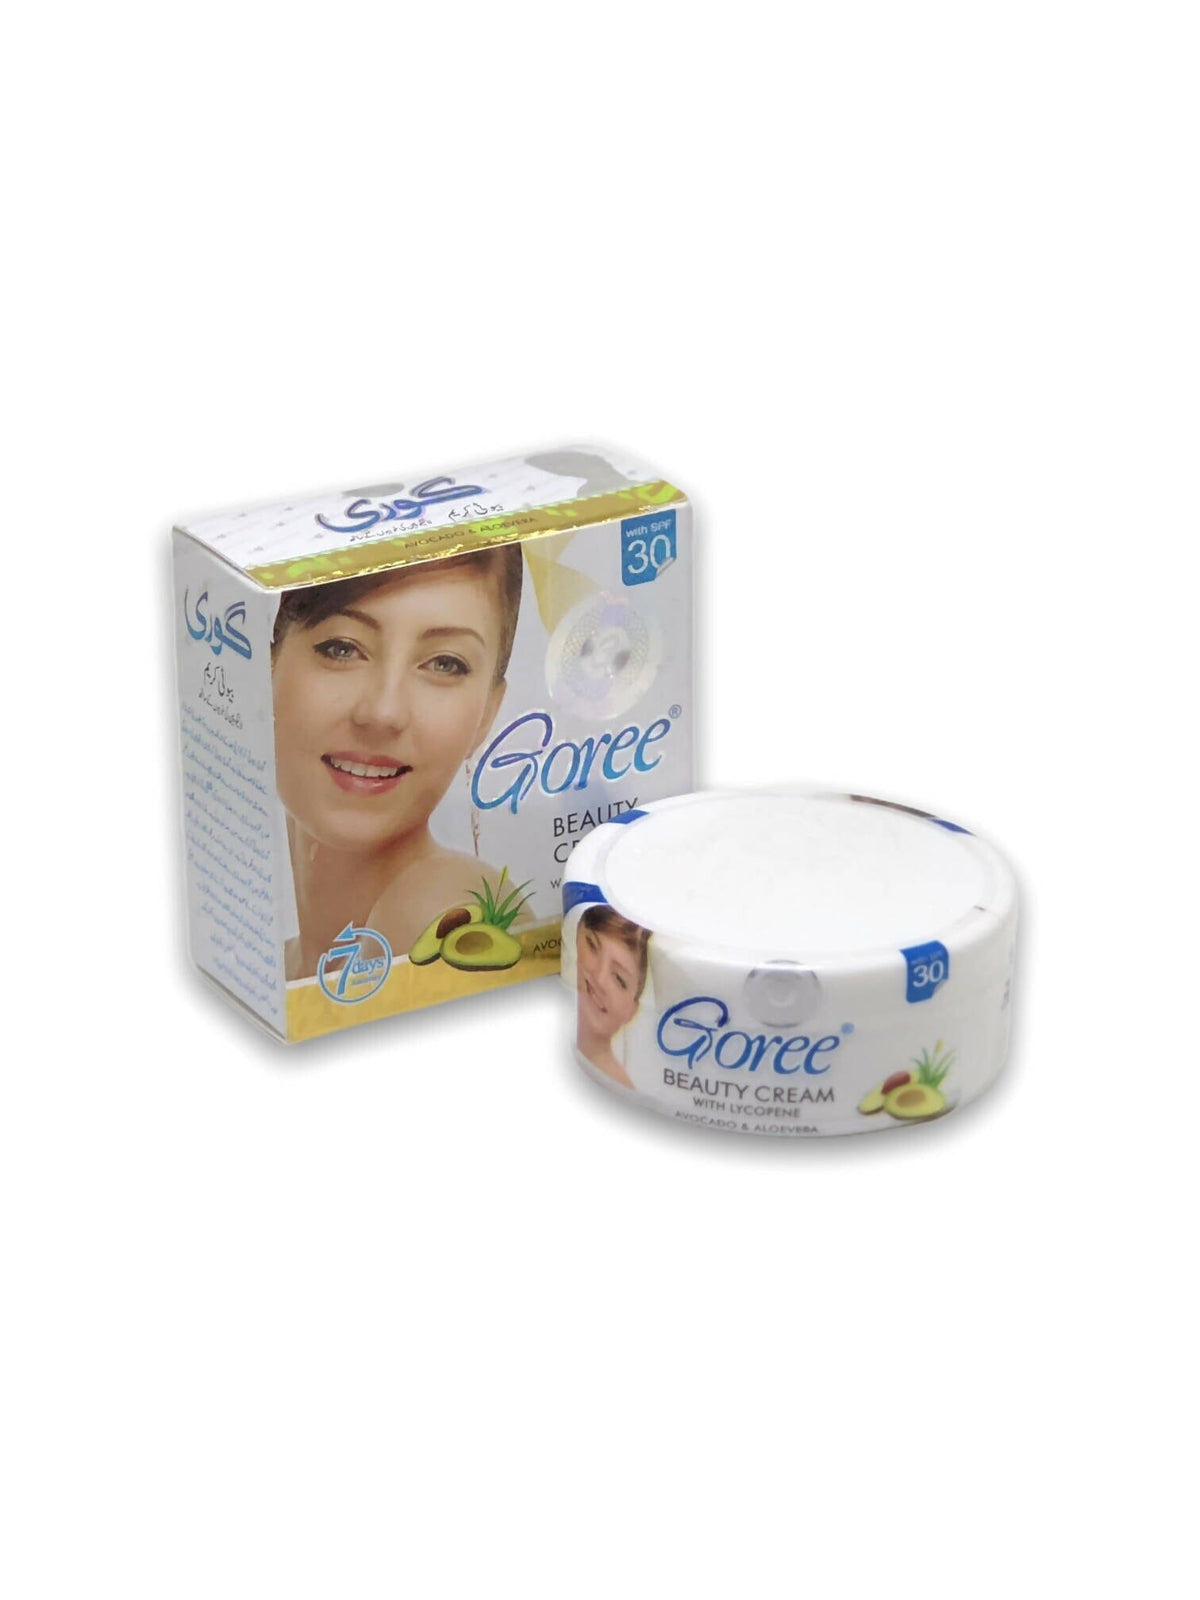 SALE／86%OFF】 Goree beauty cream 美容クリーム 5 pieces i9tmg.com.br